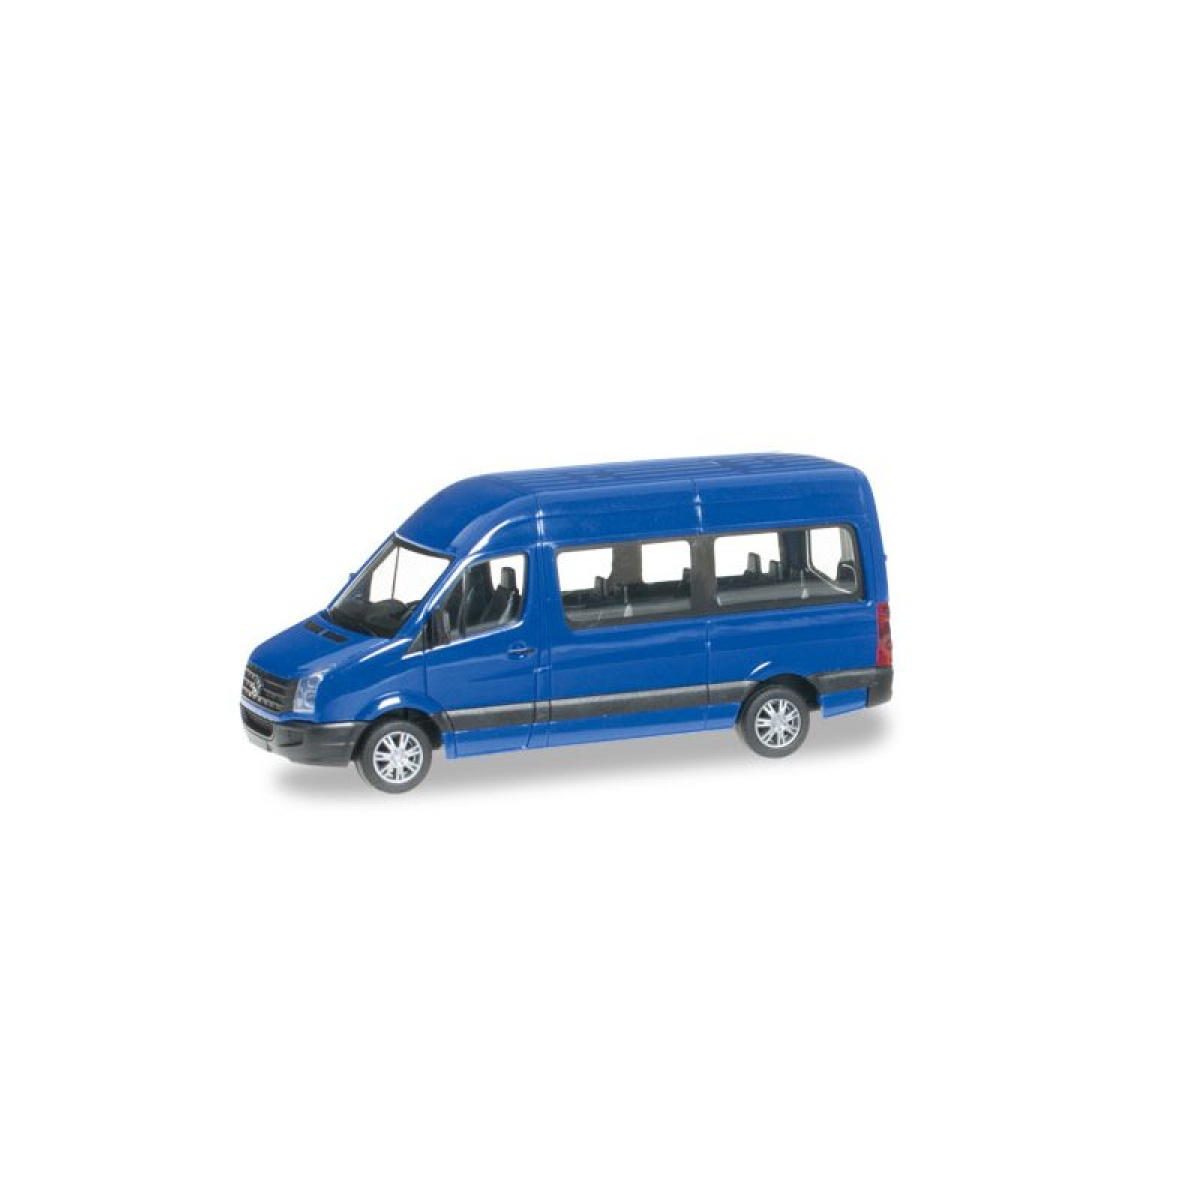 Herpa 049948-002 VW Crafter Bus Hochdach, ultramarinblau